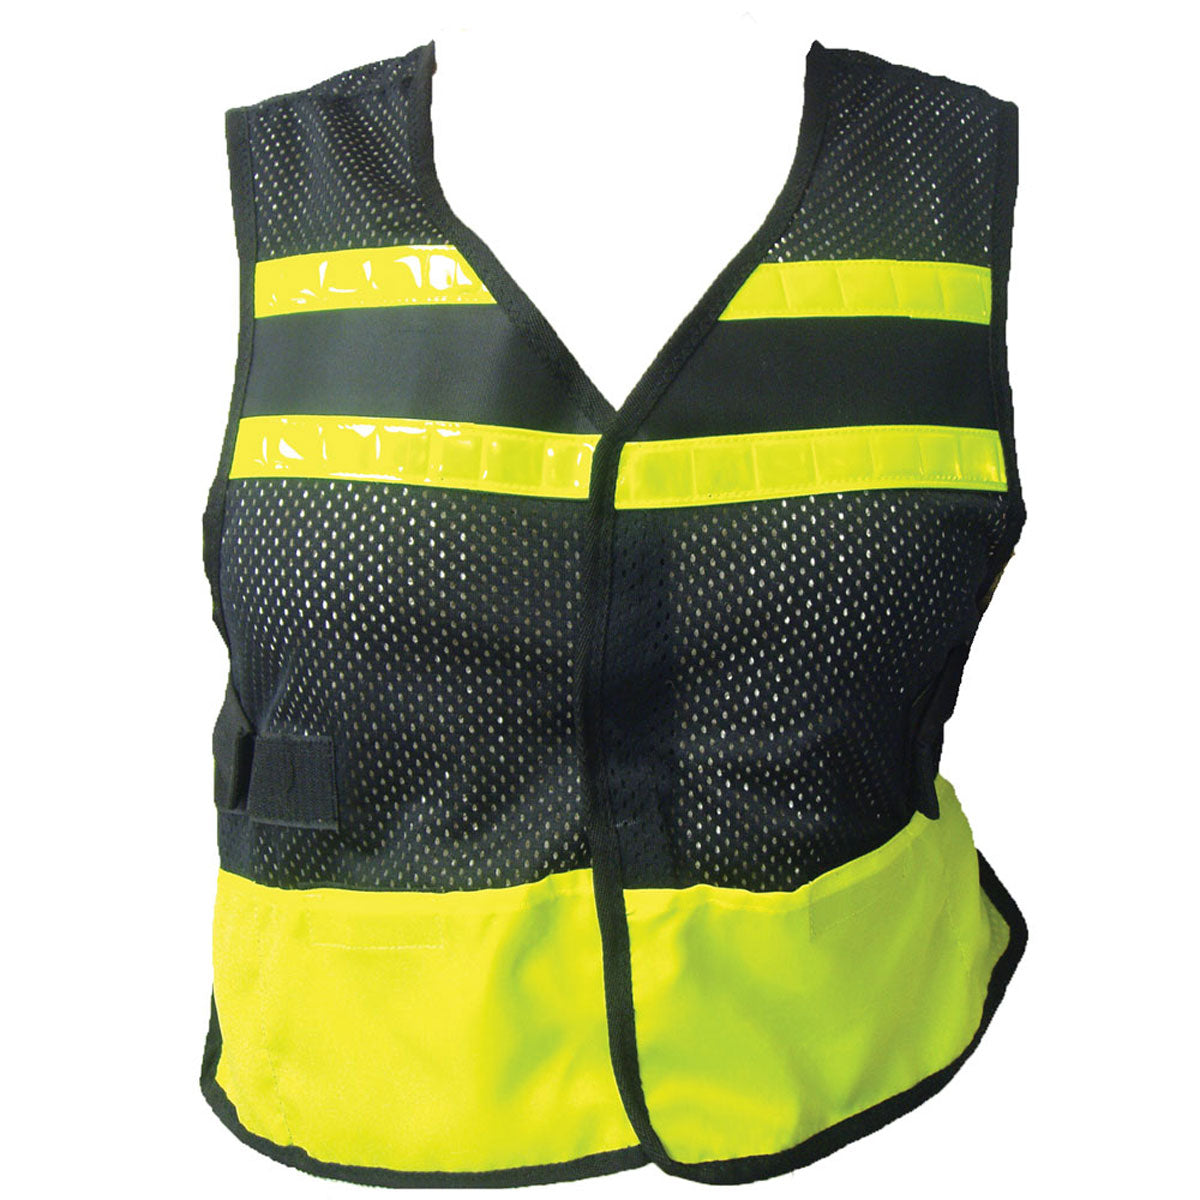 VisEquips Reflective Safety Vest